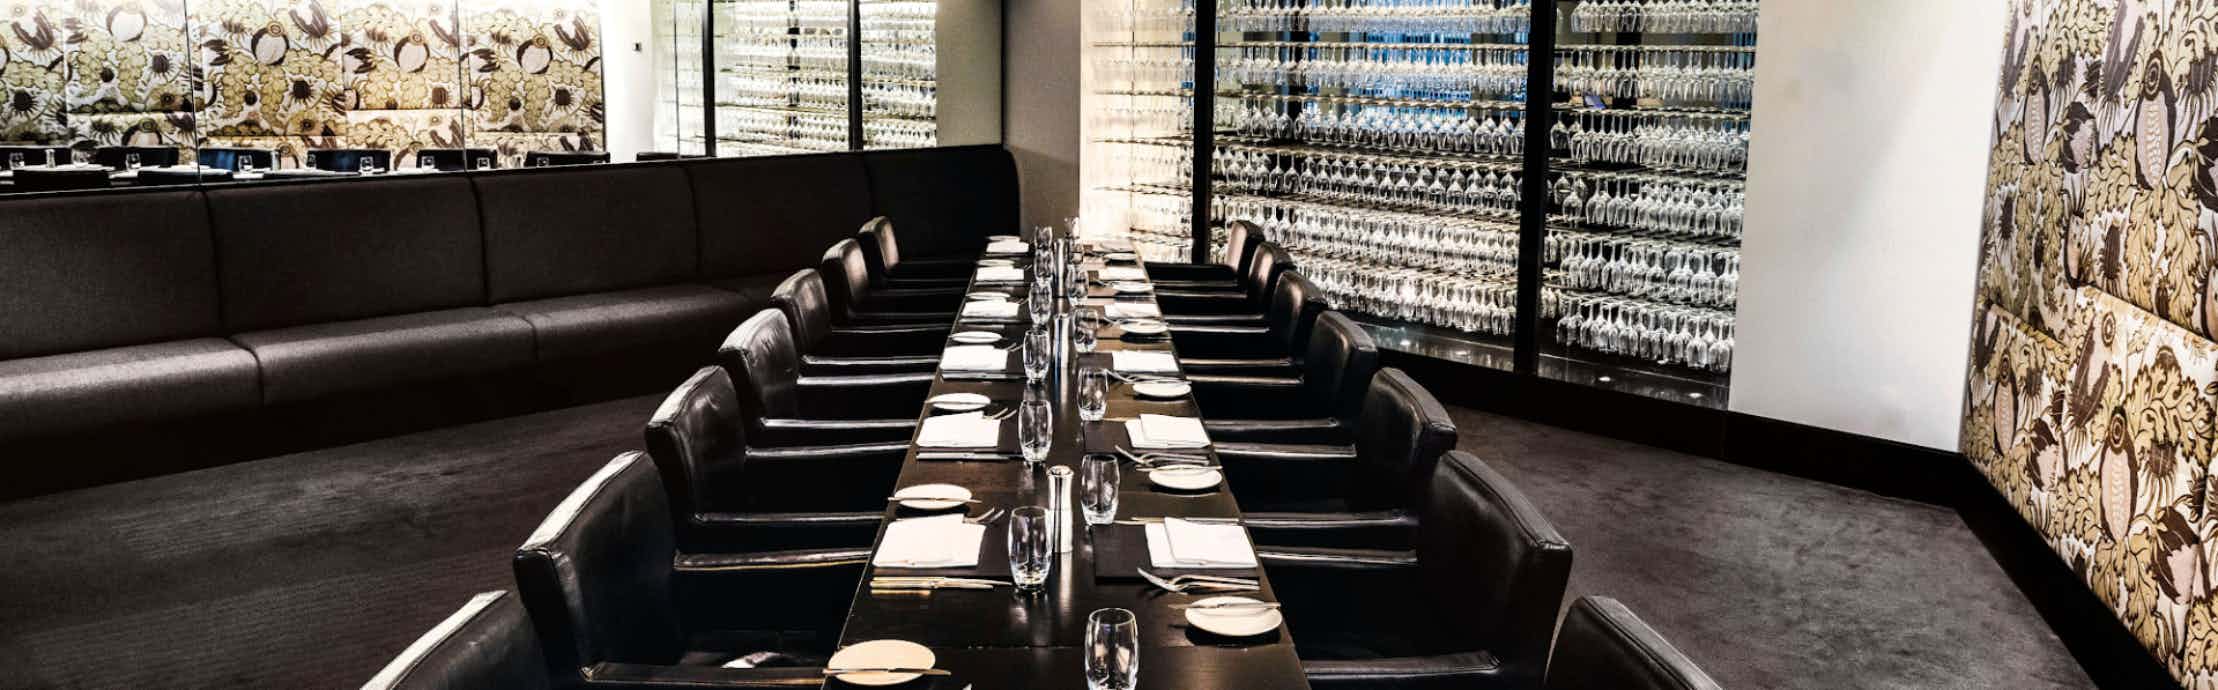 Mezzanine Private Dining Room, Rockpool Bar & Grill Sydney